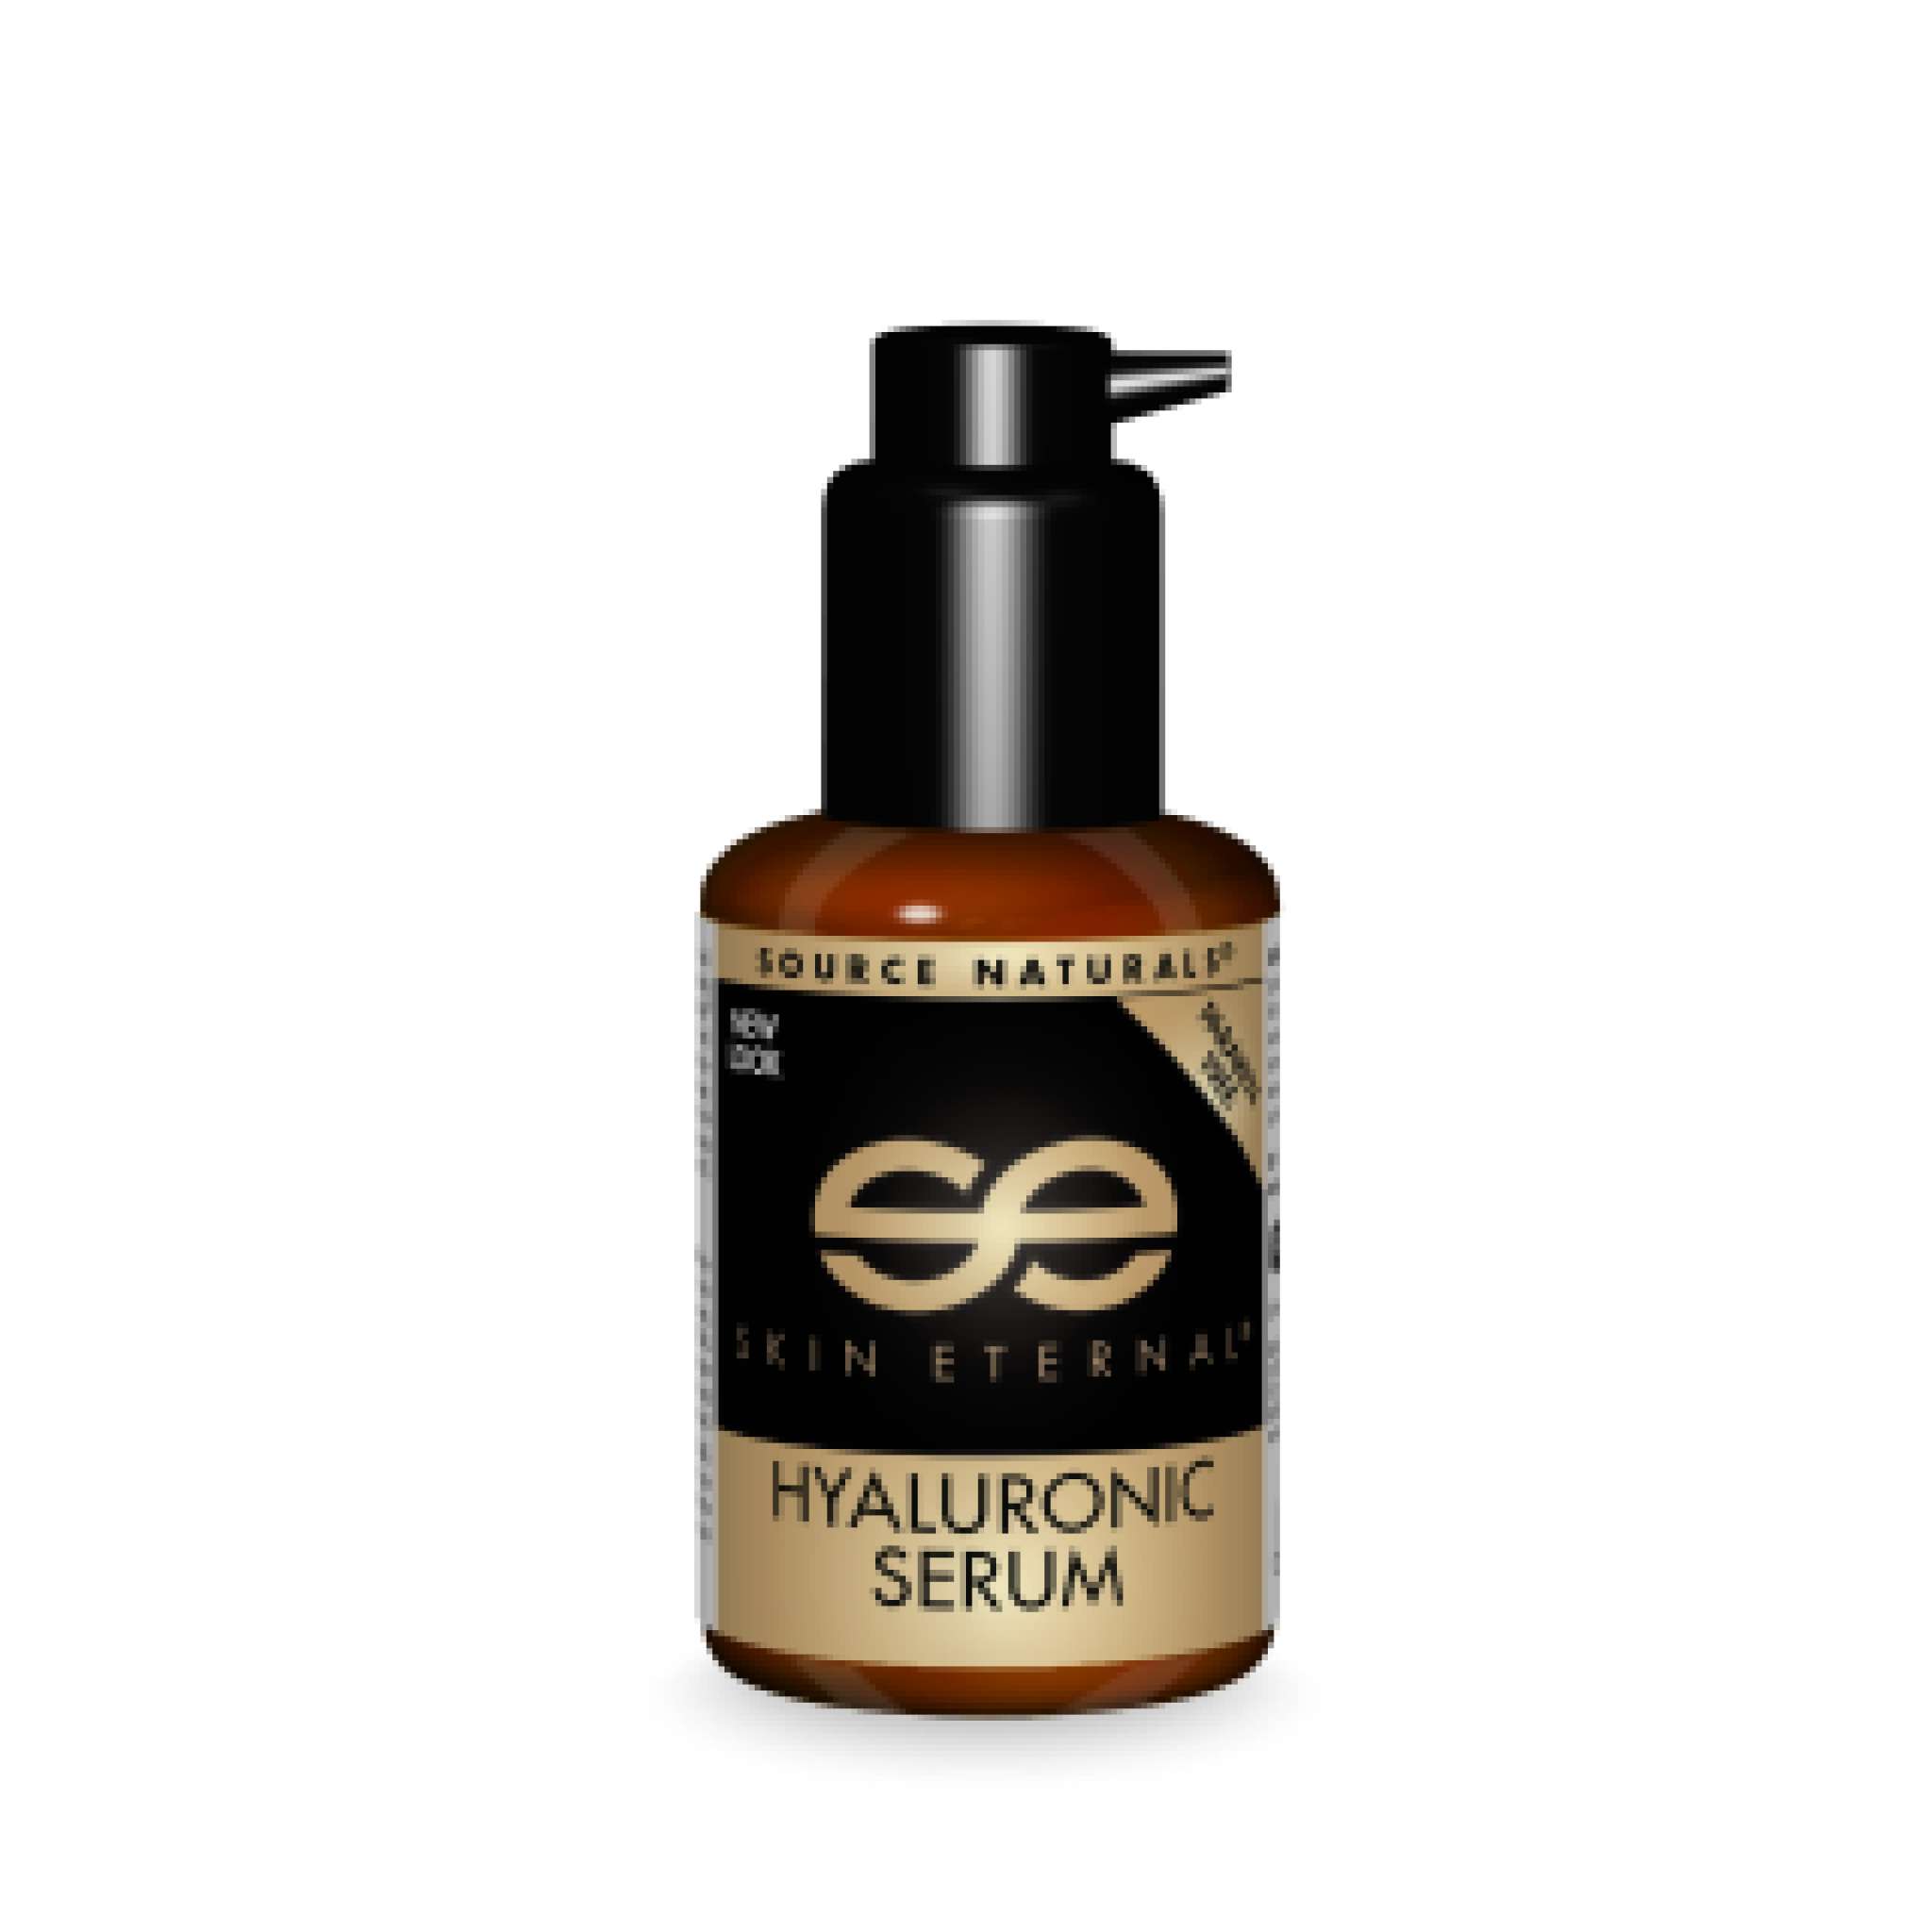 Source Naturals - Skin Eternal Hyaluronic Serum